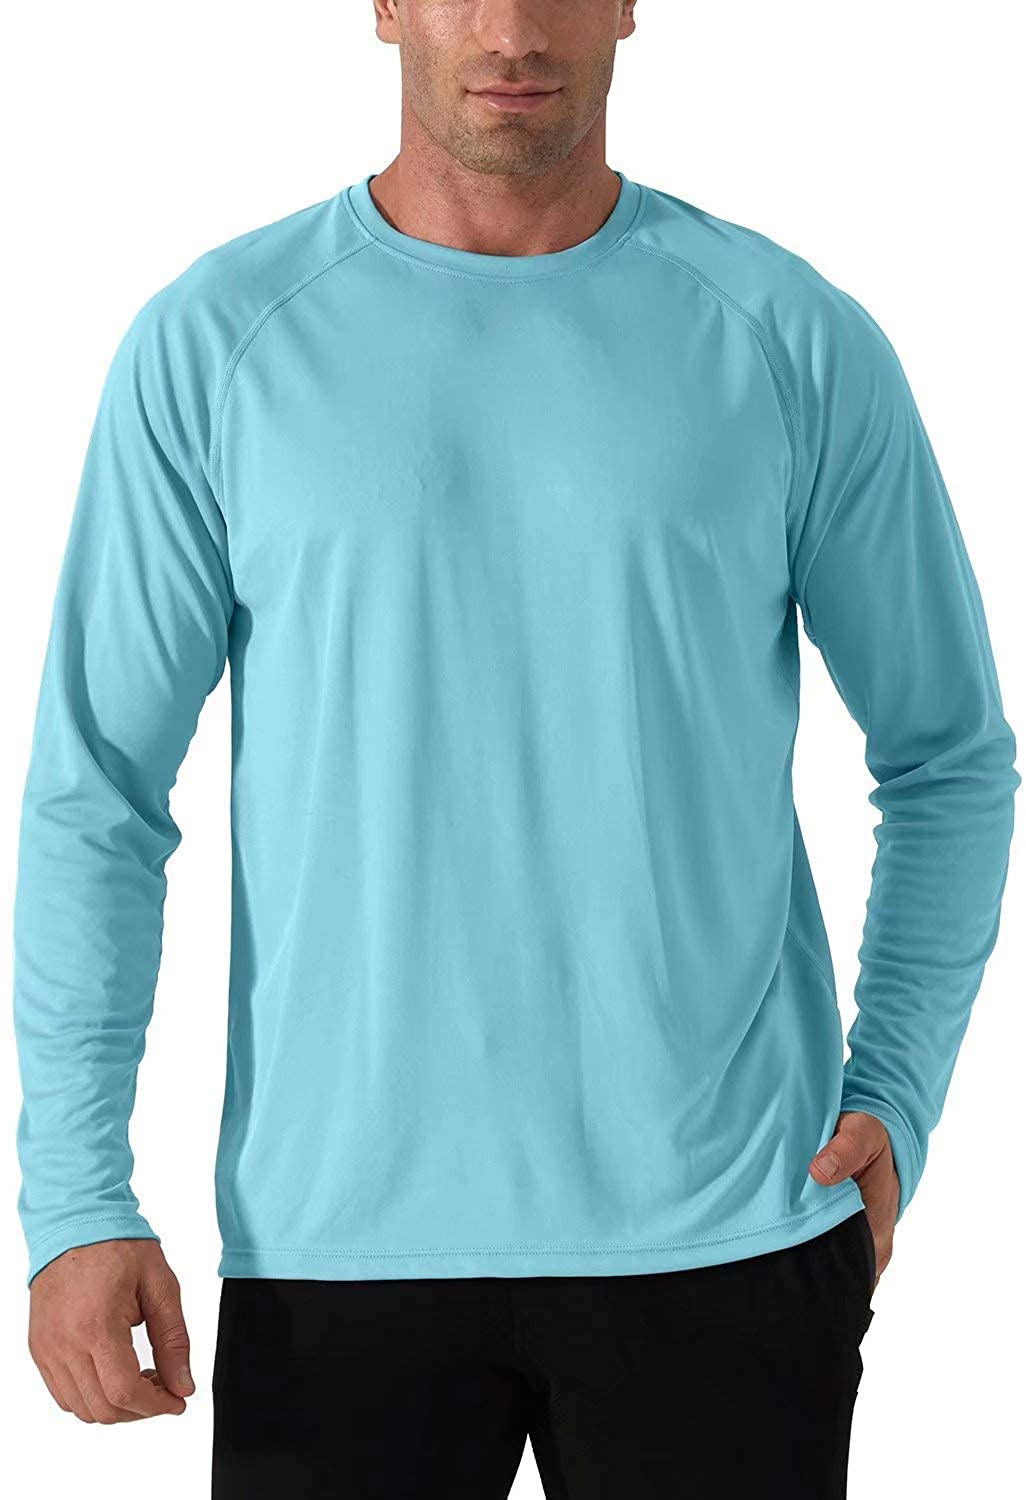 UV Sun Protection Light Weight Regular Fit Training Tops HMILES Mens Long Sleeve Running Tops Male Raglan Sleeve Fitness Sports T Shirts 50 